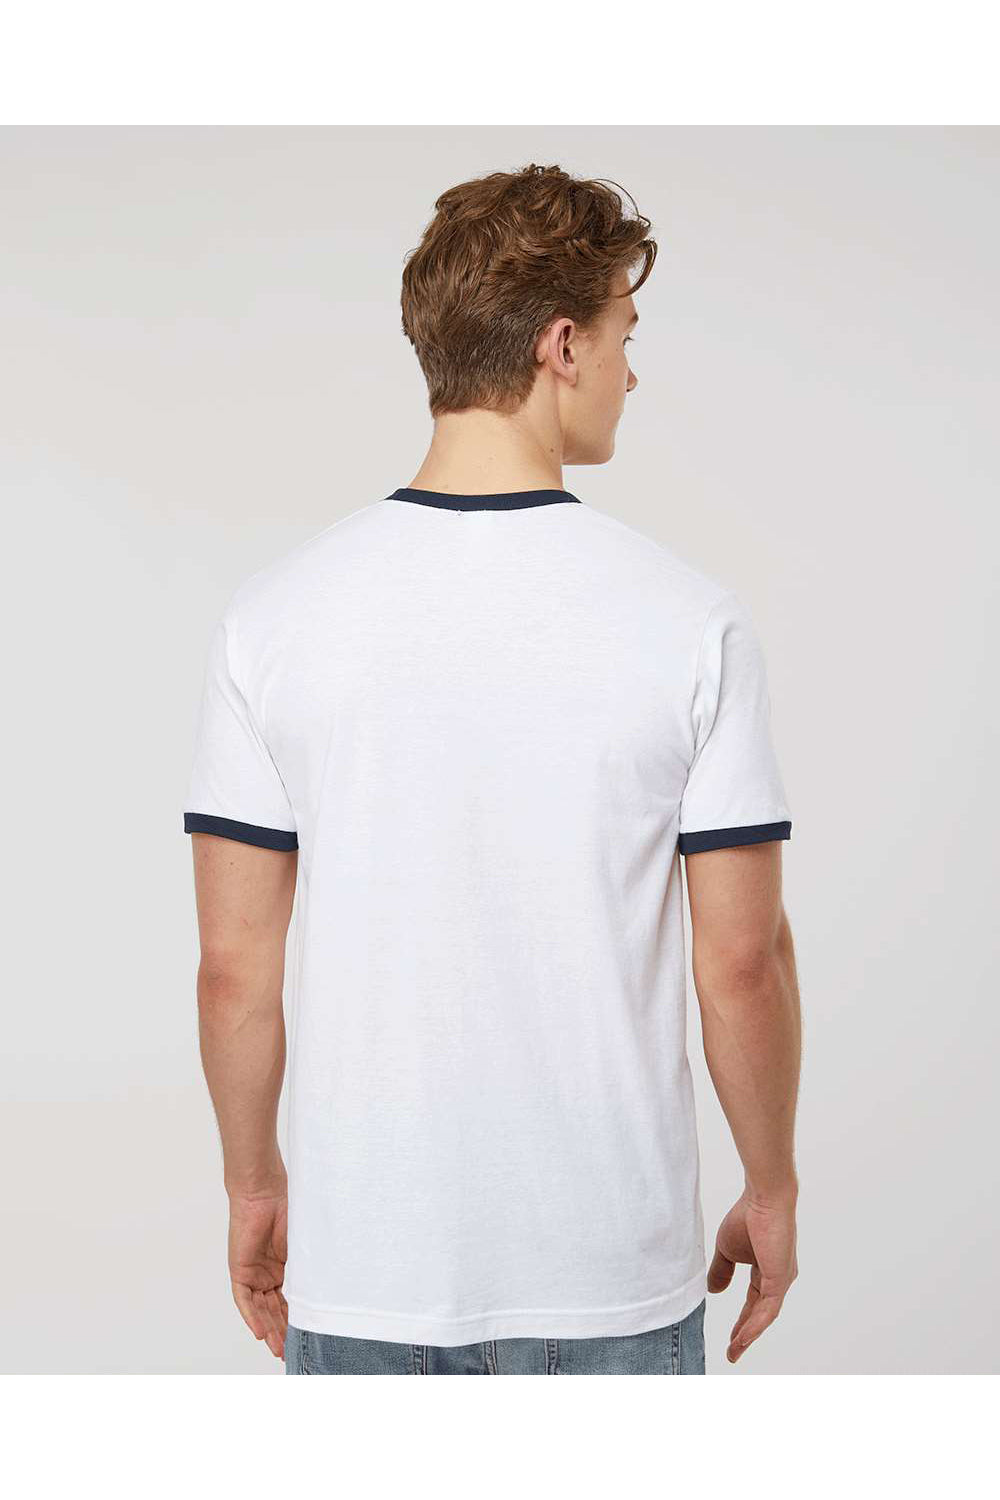 Tultex 246 Mens Fine Jersey Ringer Short Sleeve Crewneck T-Shirt White/Navy Blue Model Back